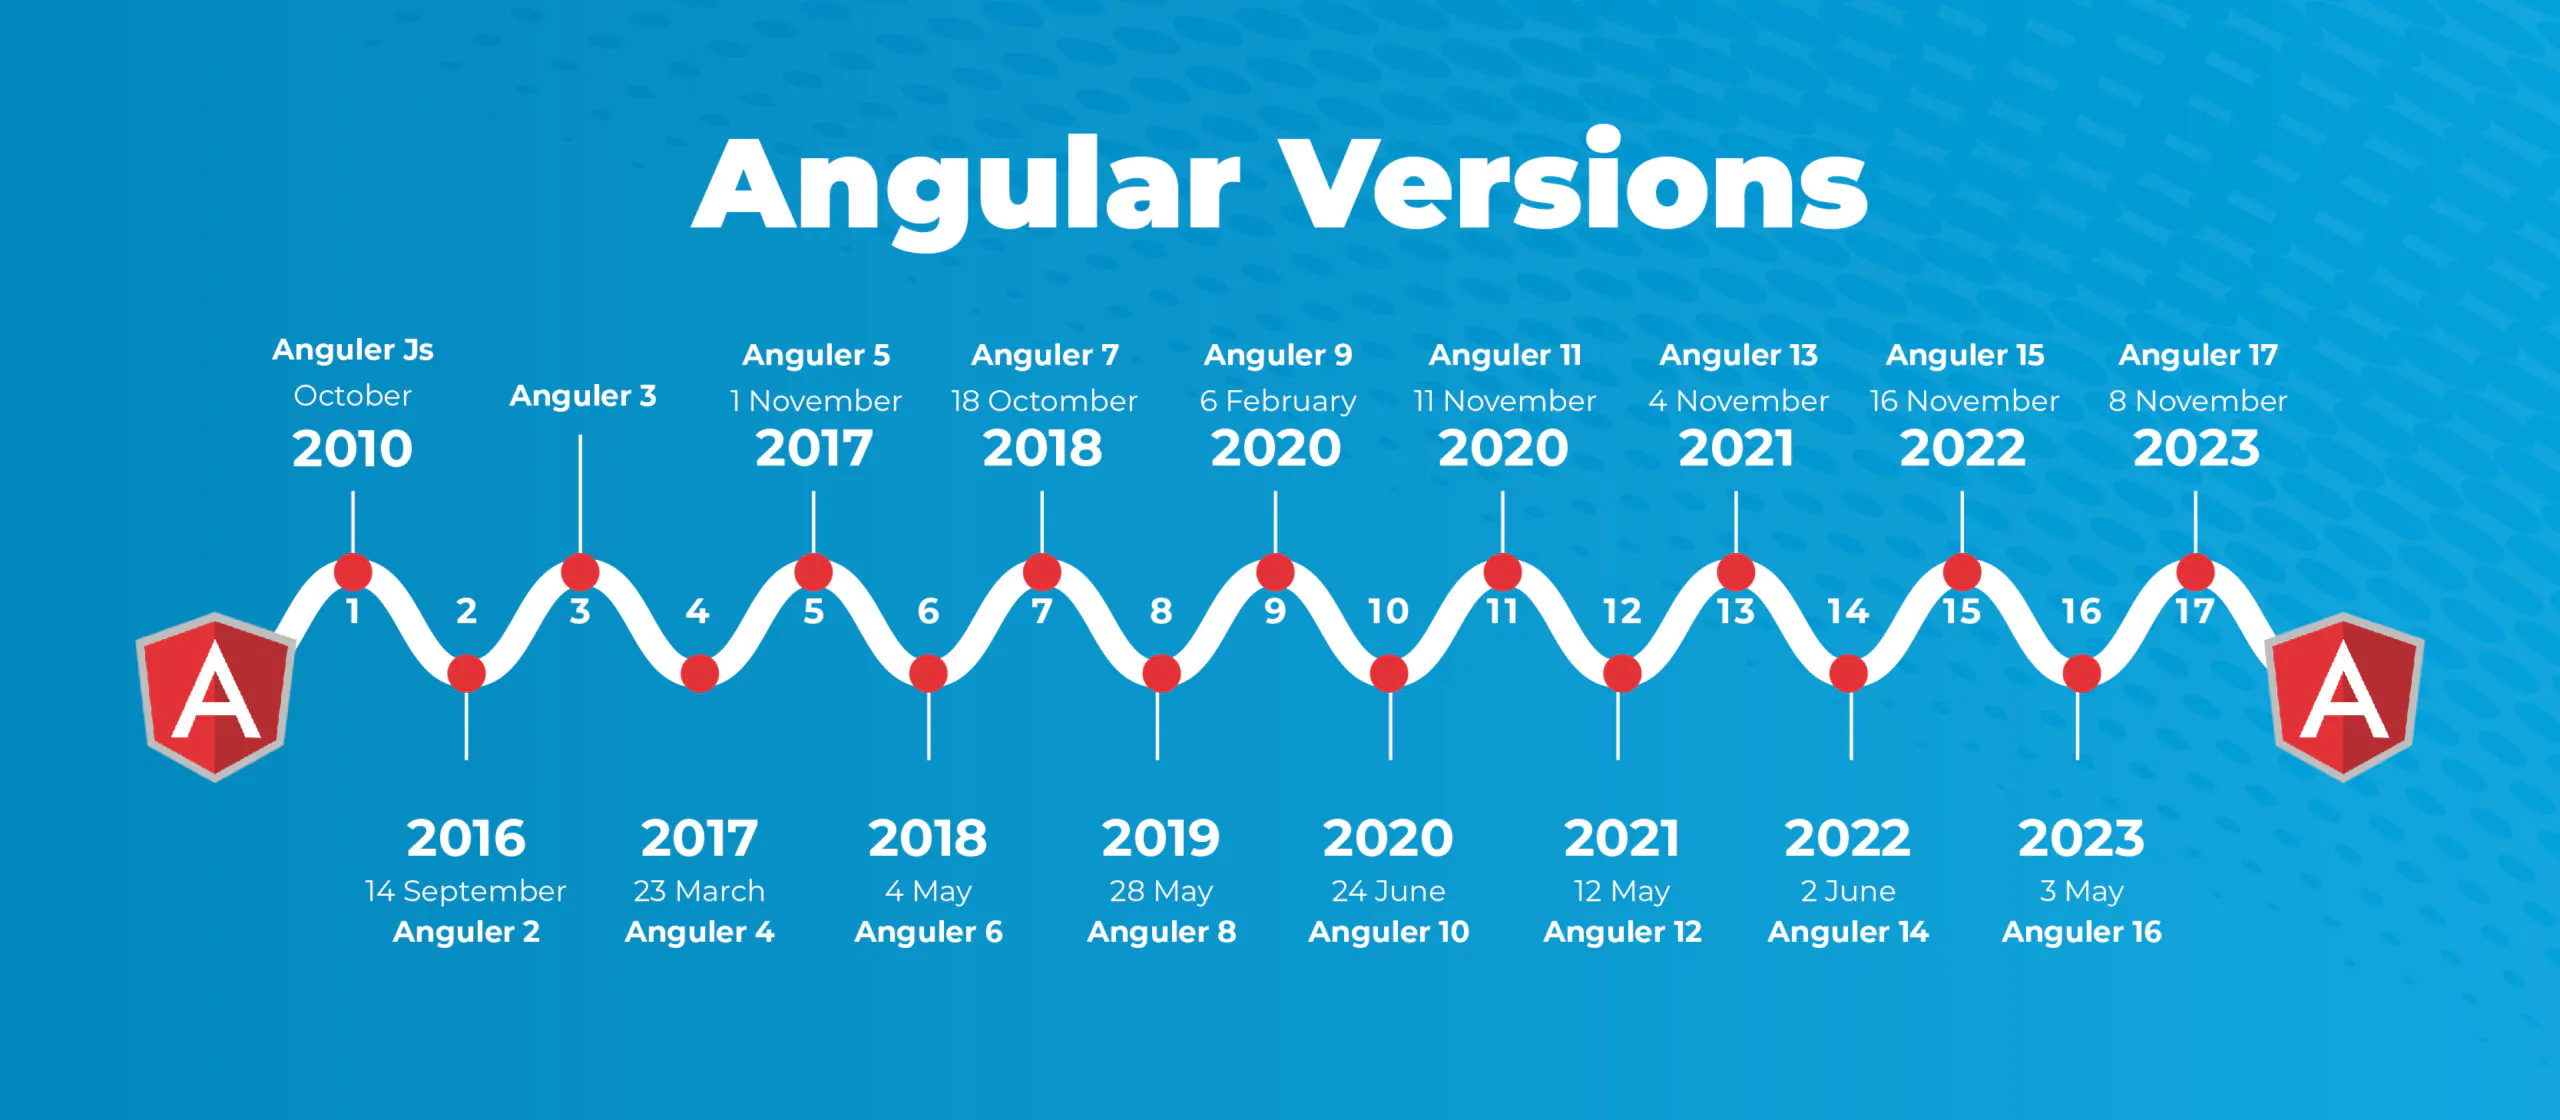 Types of Angular Versions